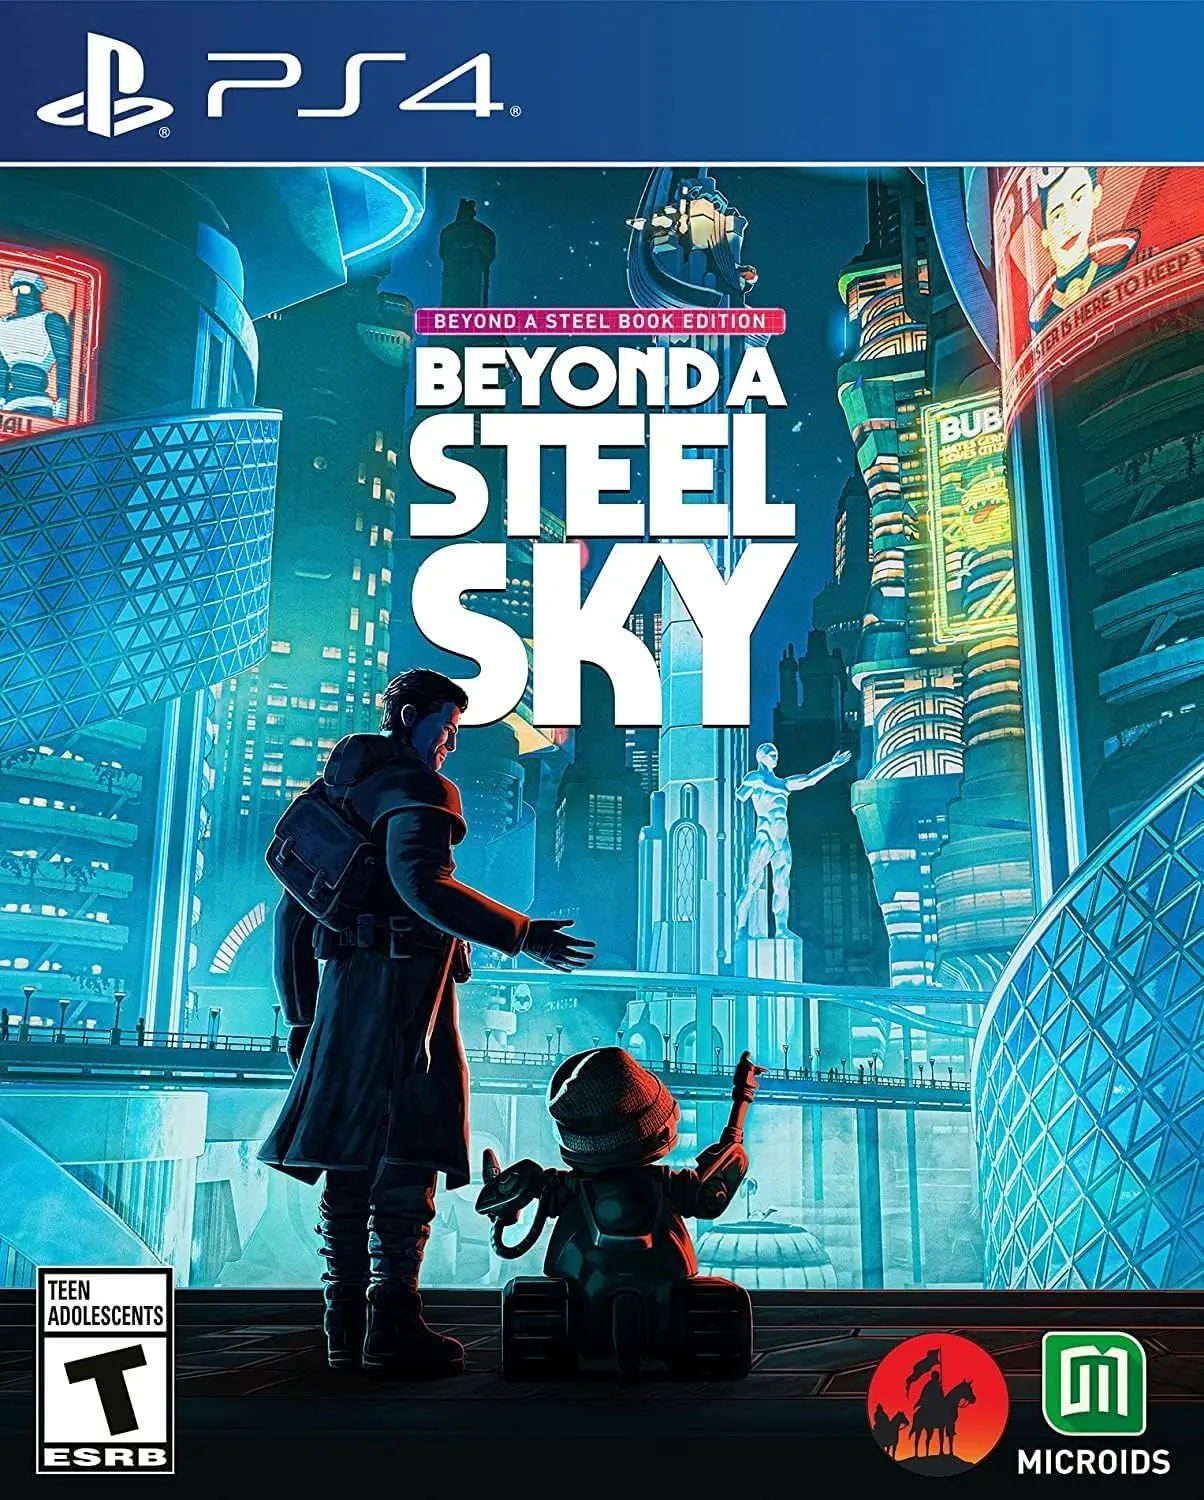 

A Steel Sky Beyond A Steel Book Edition